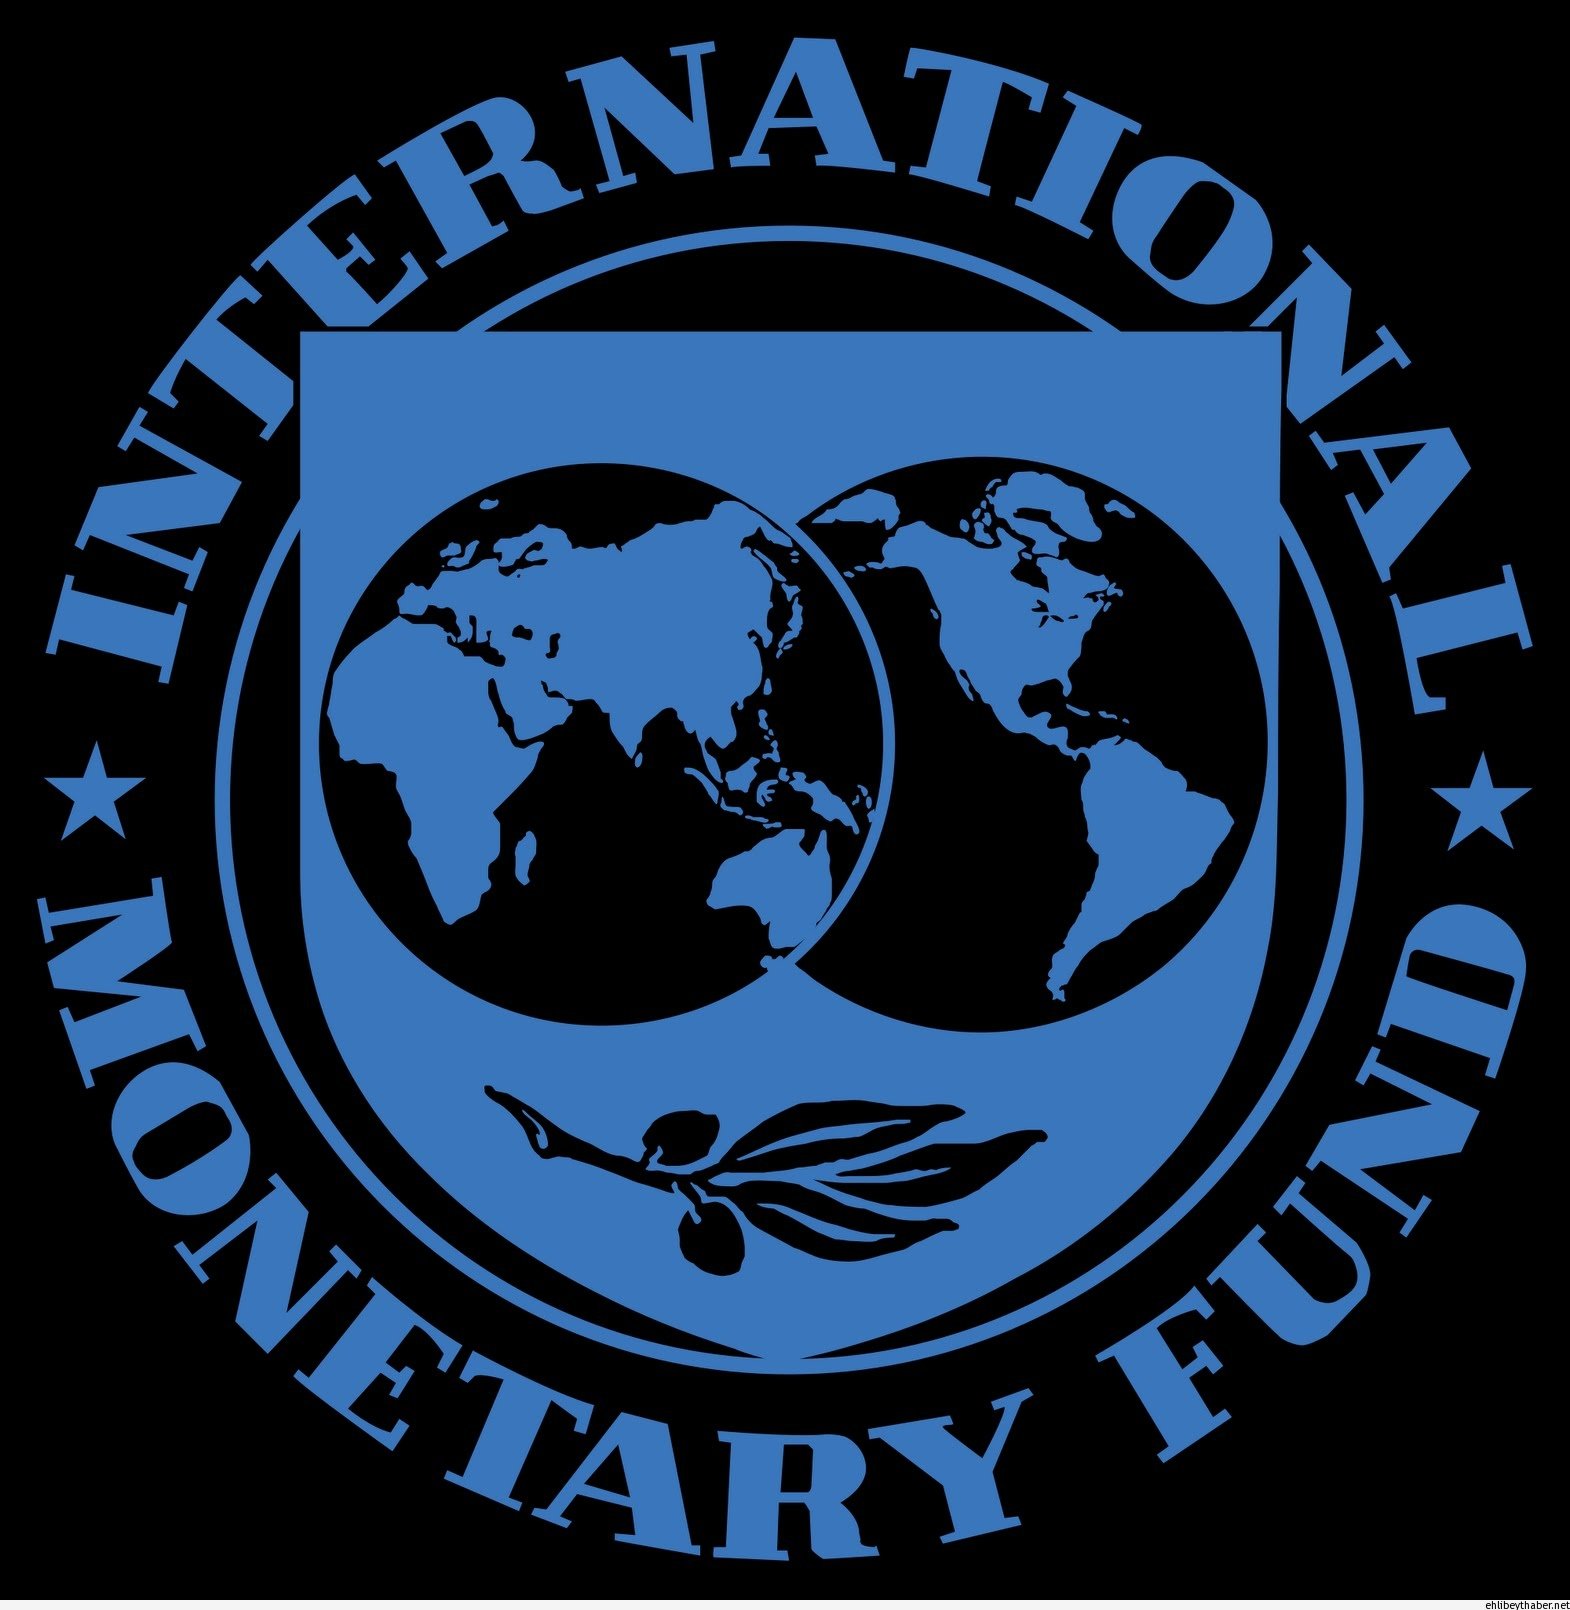 Мвф аббревиатура. Международный валютный фонд (МВФ) - International monetary Fund (IMF). МВФ логотип. Герб международного валютного фонда. Международный валютный фонд МВФ логотип.